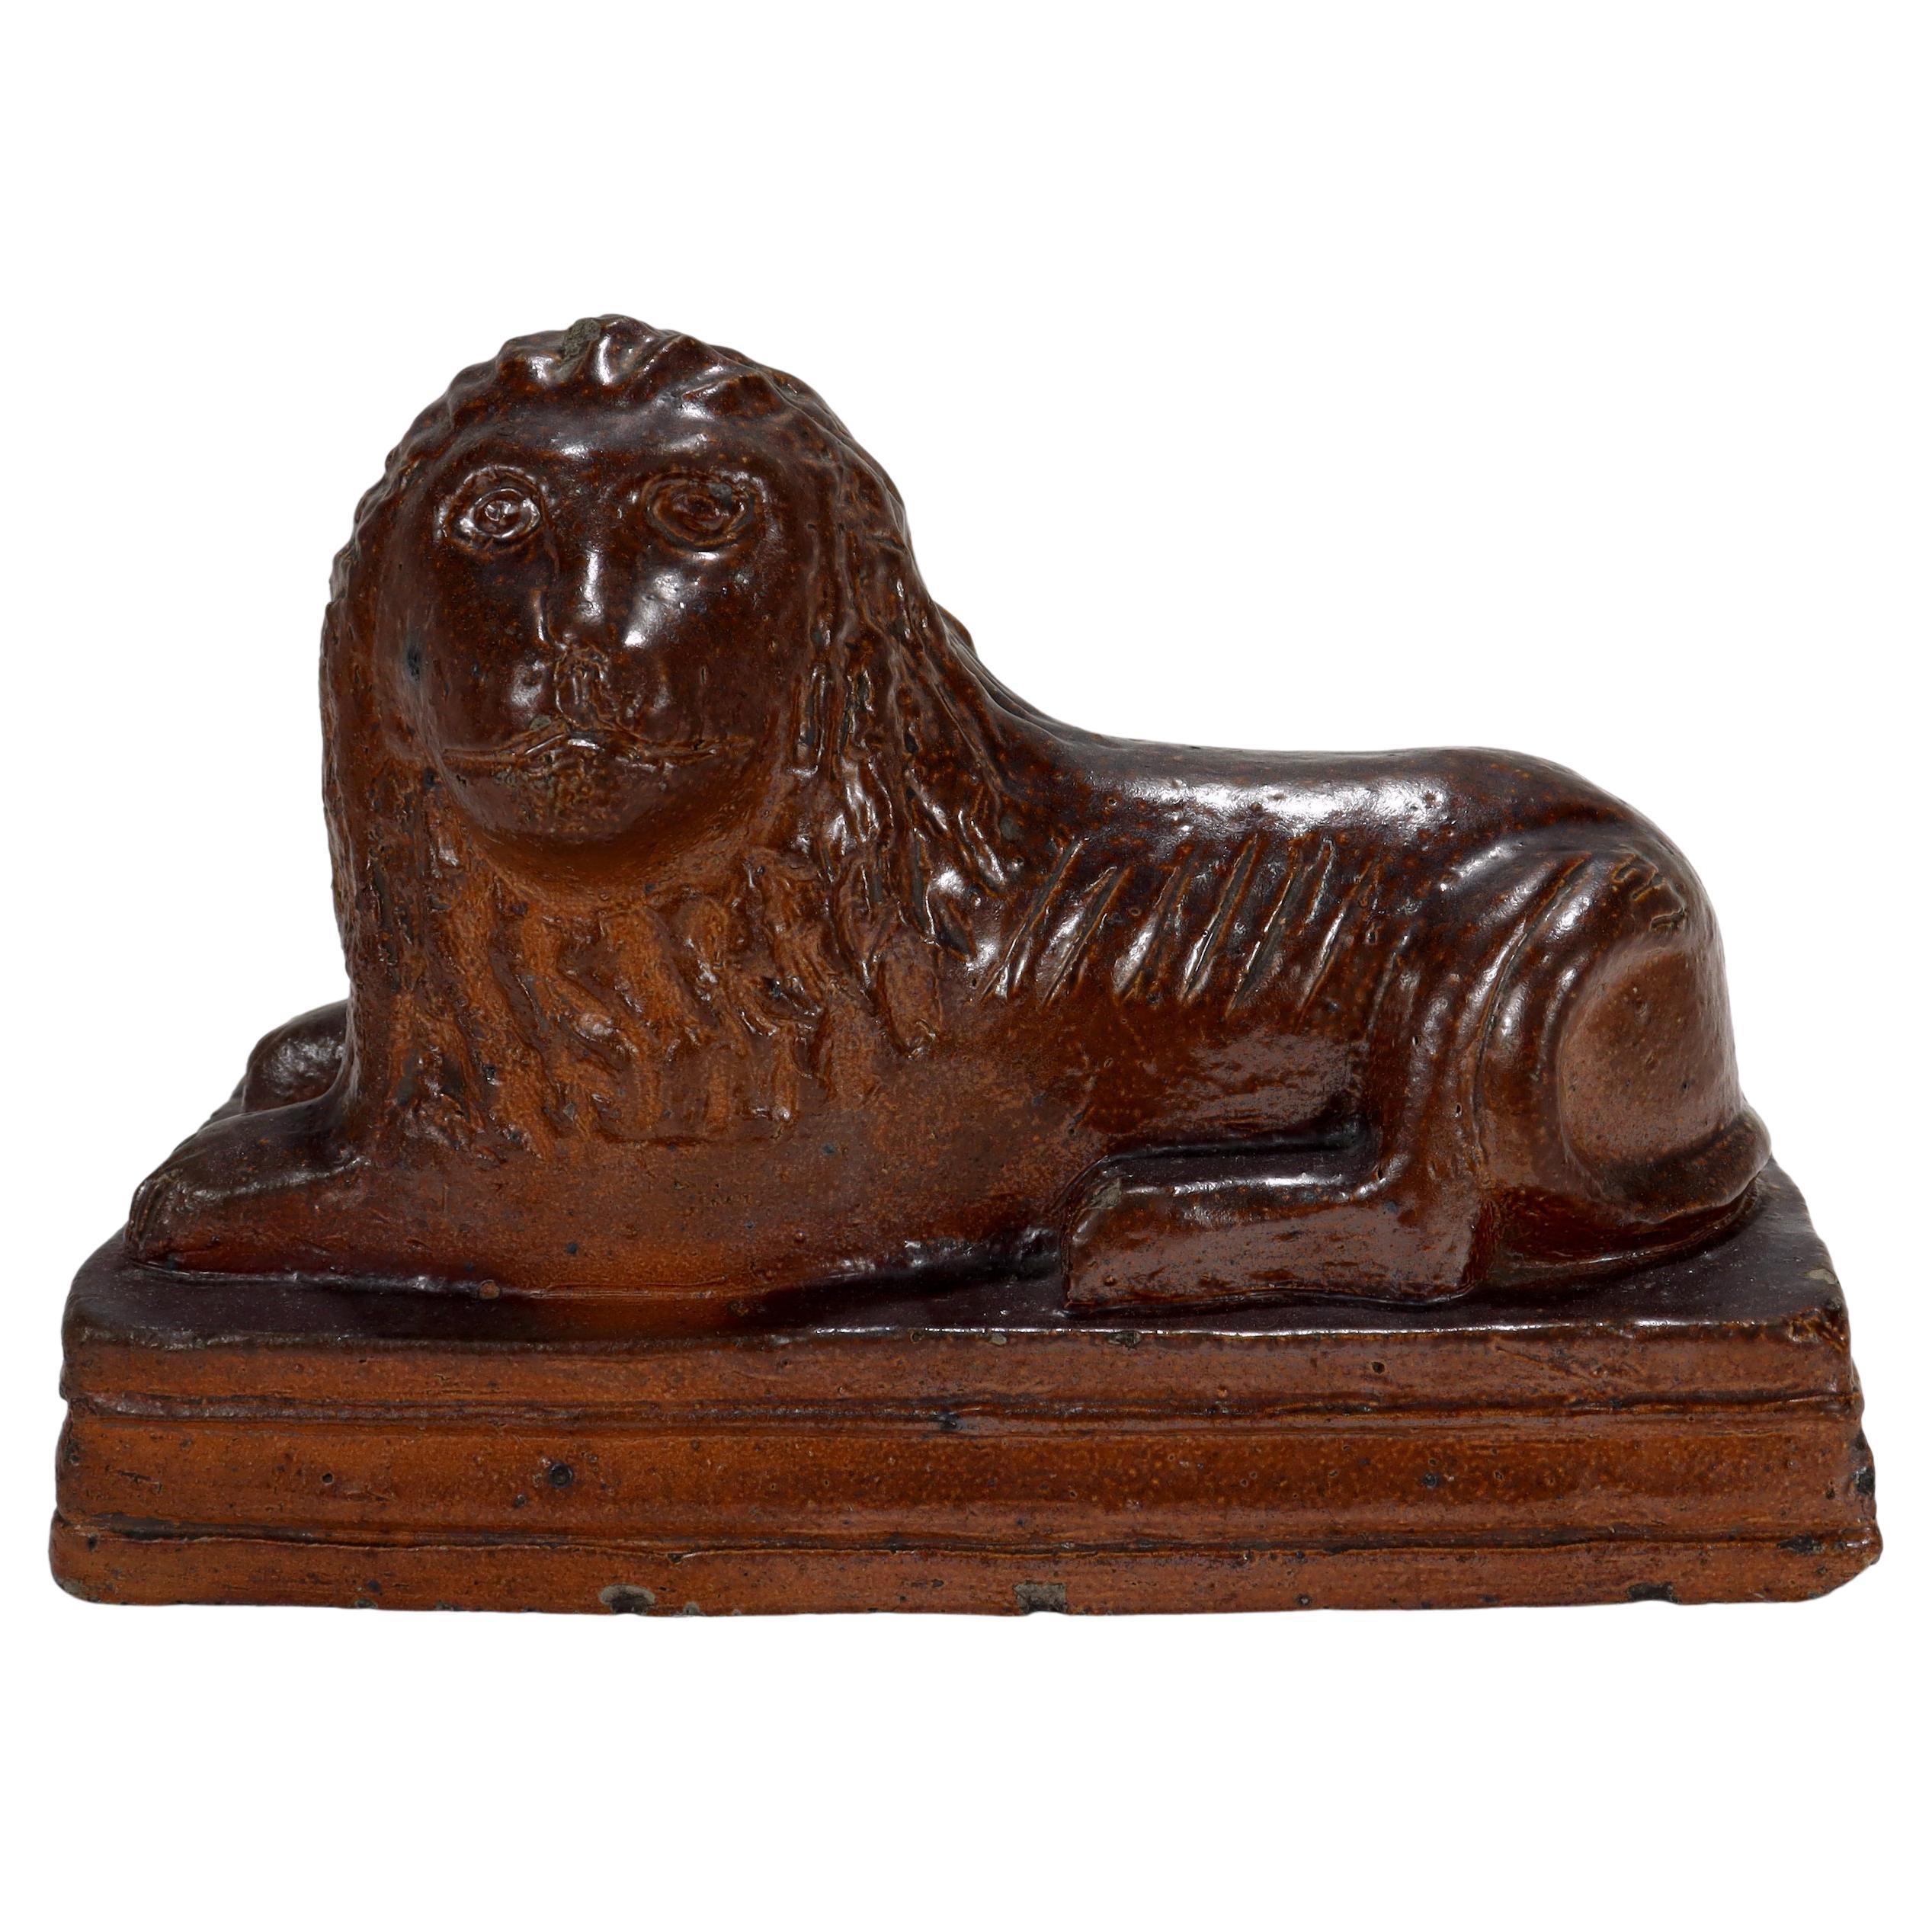 Antique Signed American Folk Art Sewer Tile or Redware Pottery Lion Figurine For Sale